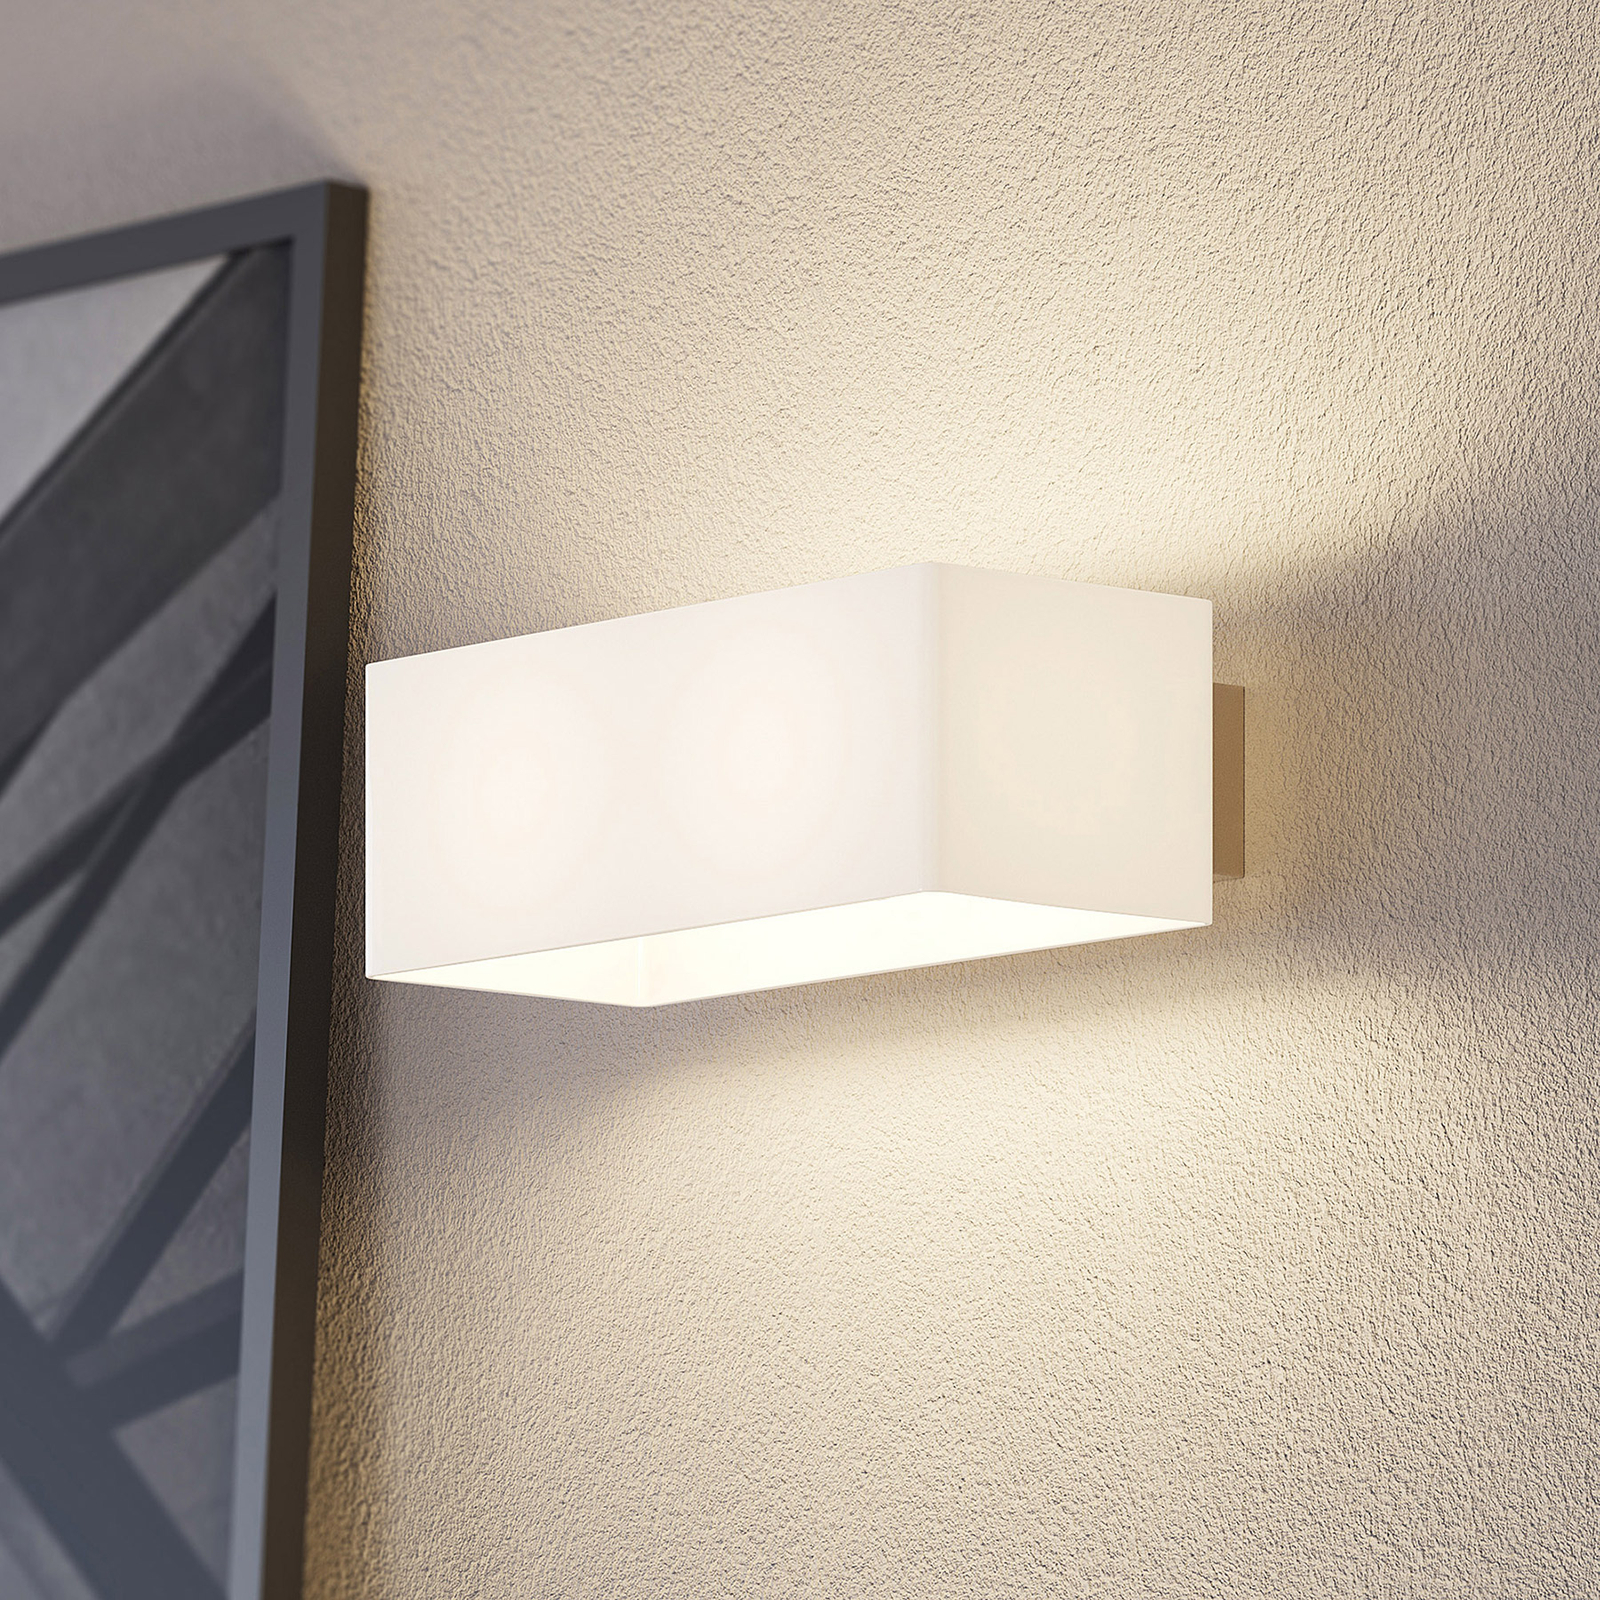 Lucande Inkar wall light, white glass lampshade